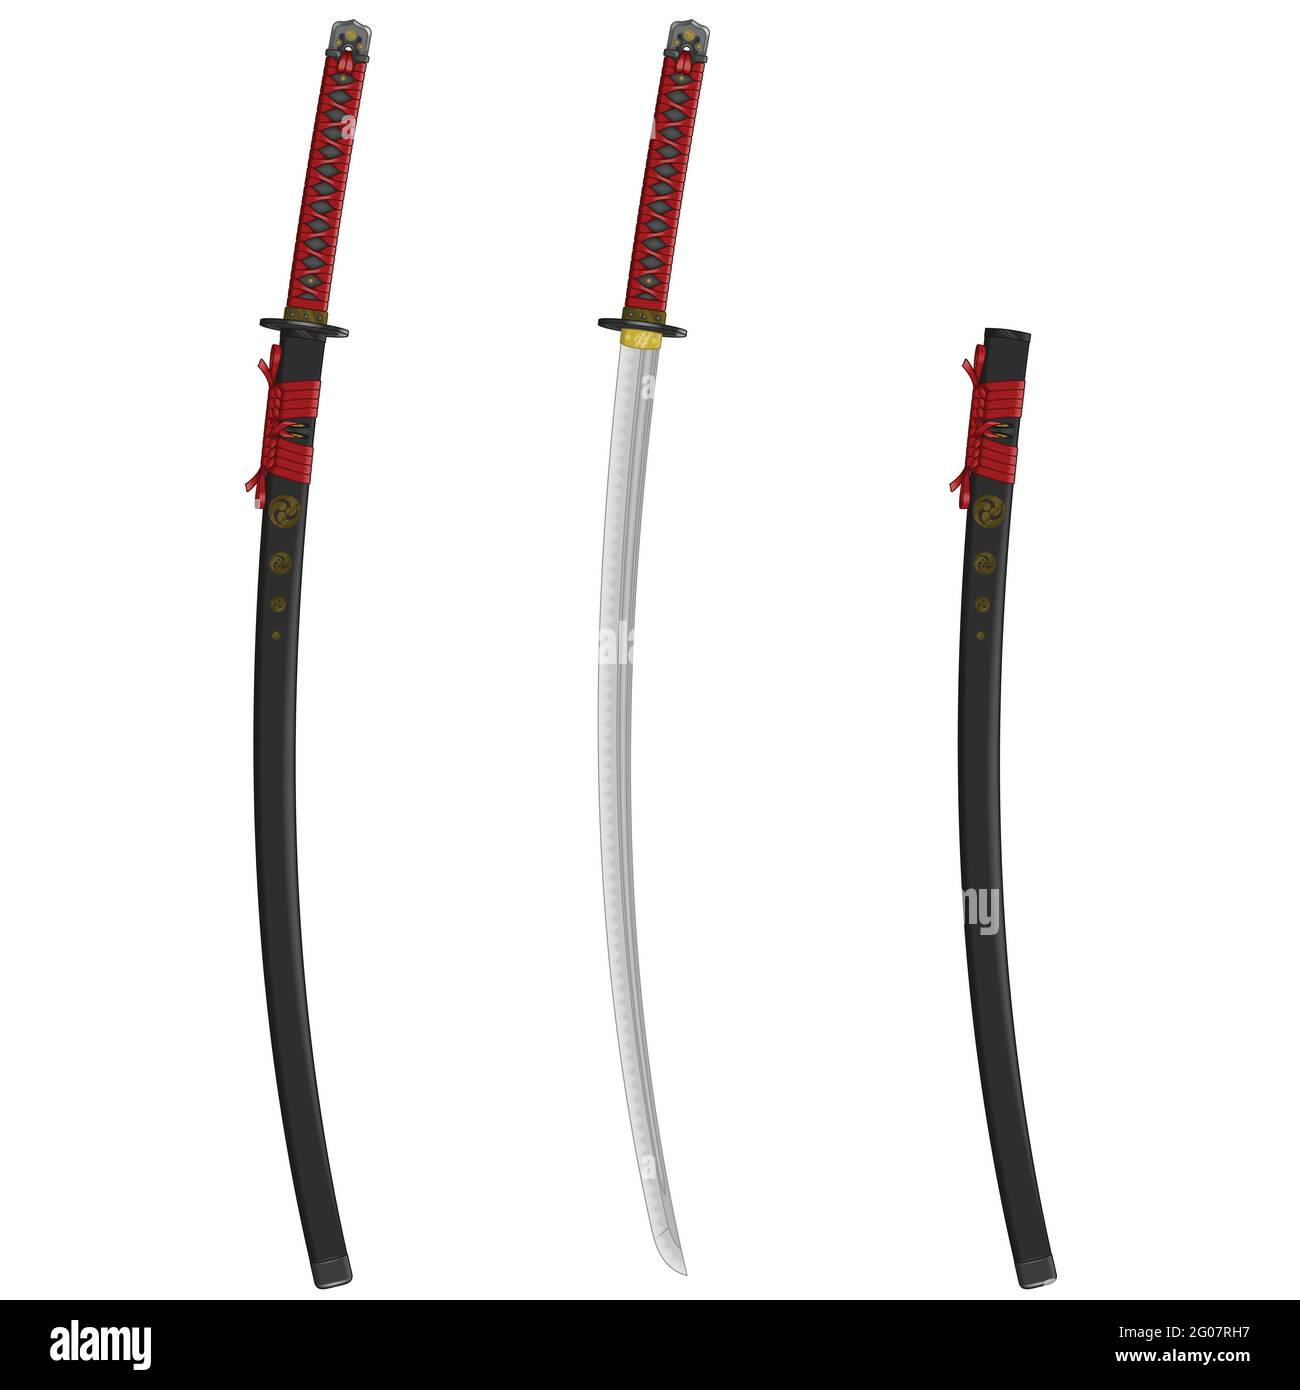 Samurai Warrior Swords